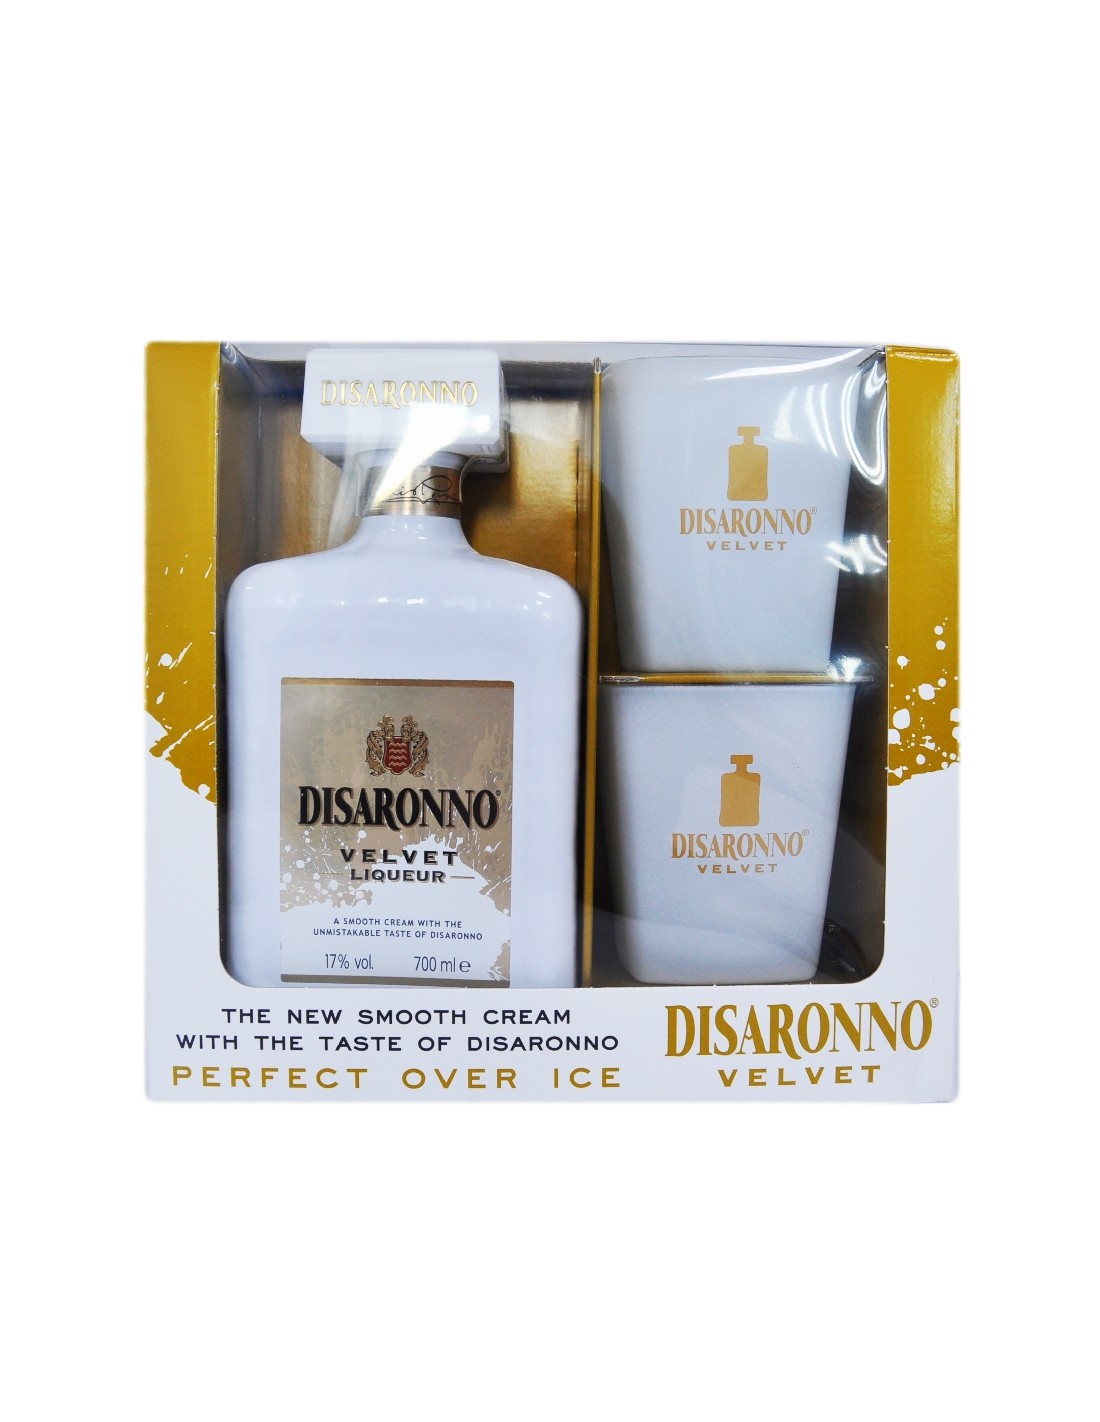 Pachet cadou lichior crema Disaronno Velvet + 2 pahare, 17% alc., 0.7L, Italia